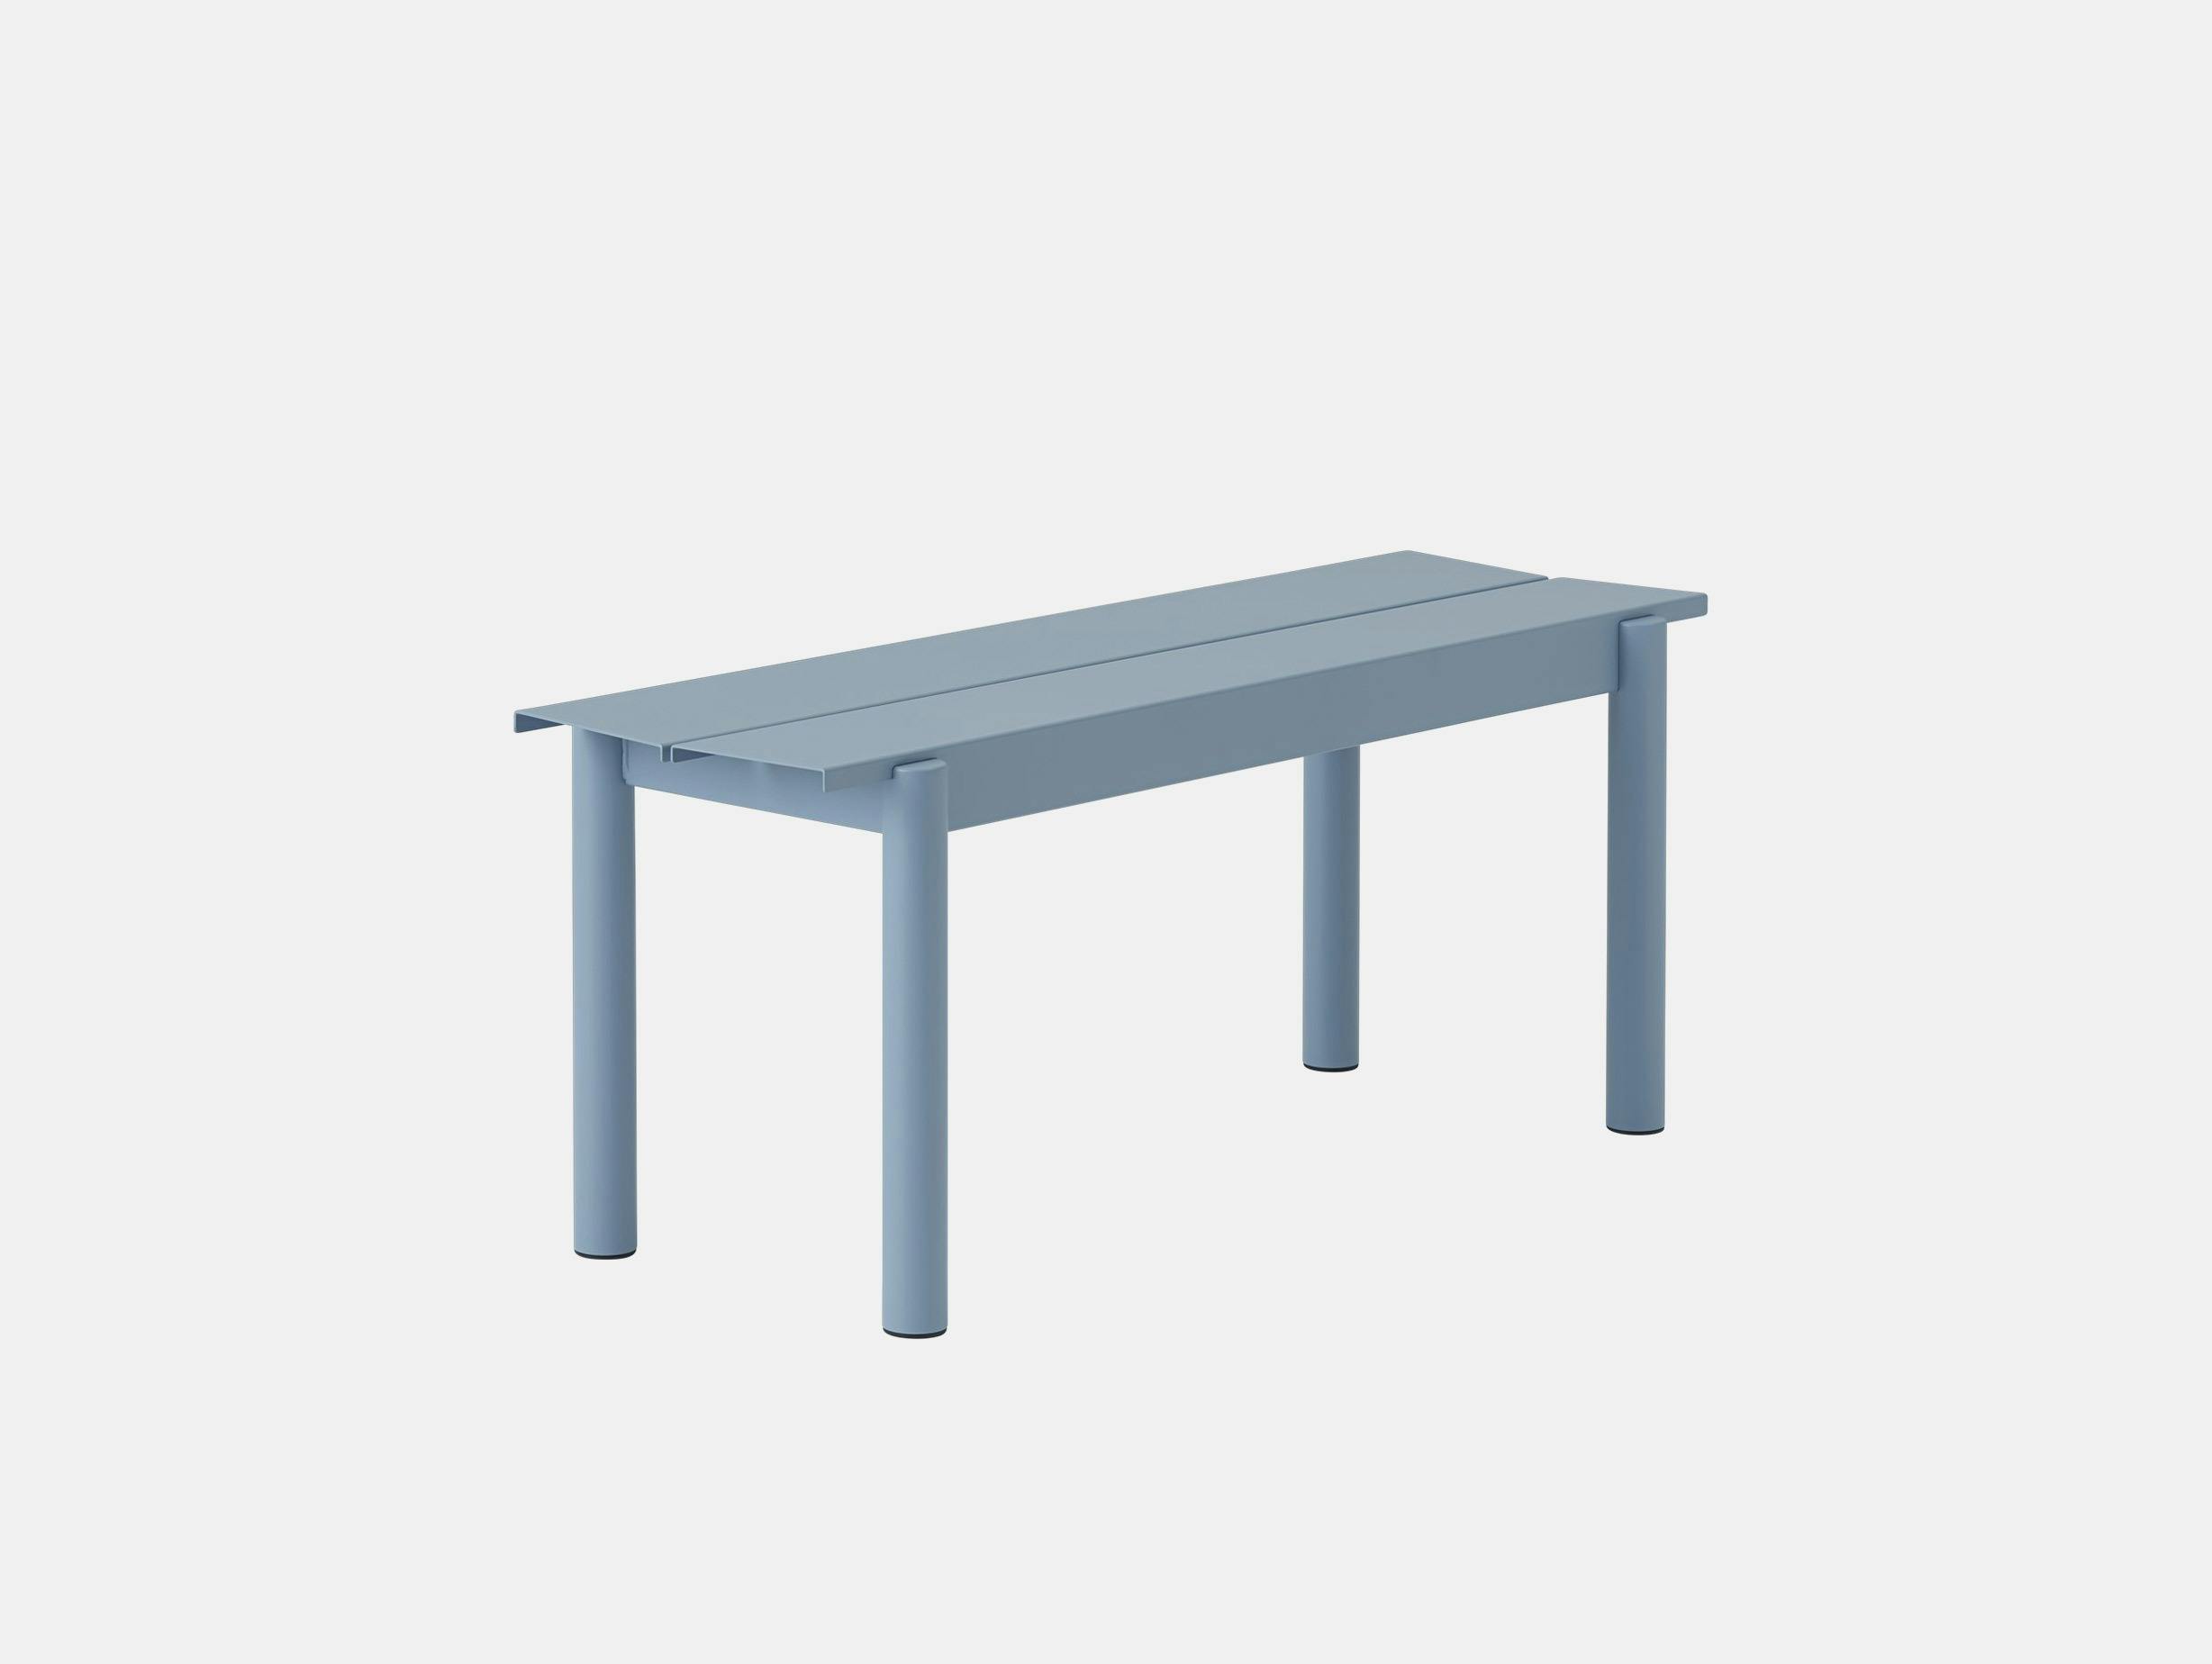 Muuto thomas bentzen linear steel bench outdoor 110 pale blue